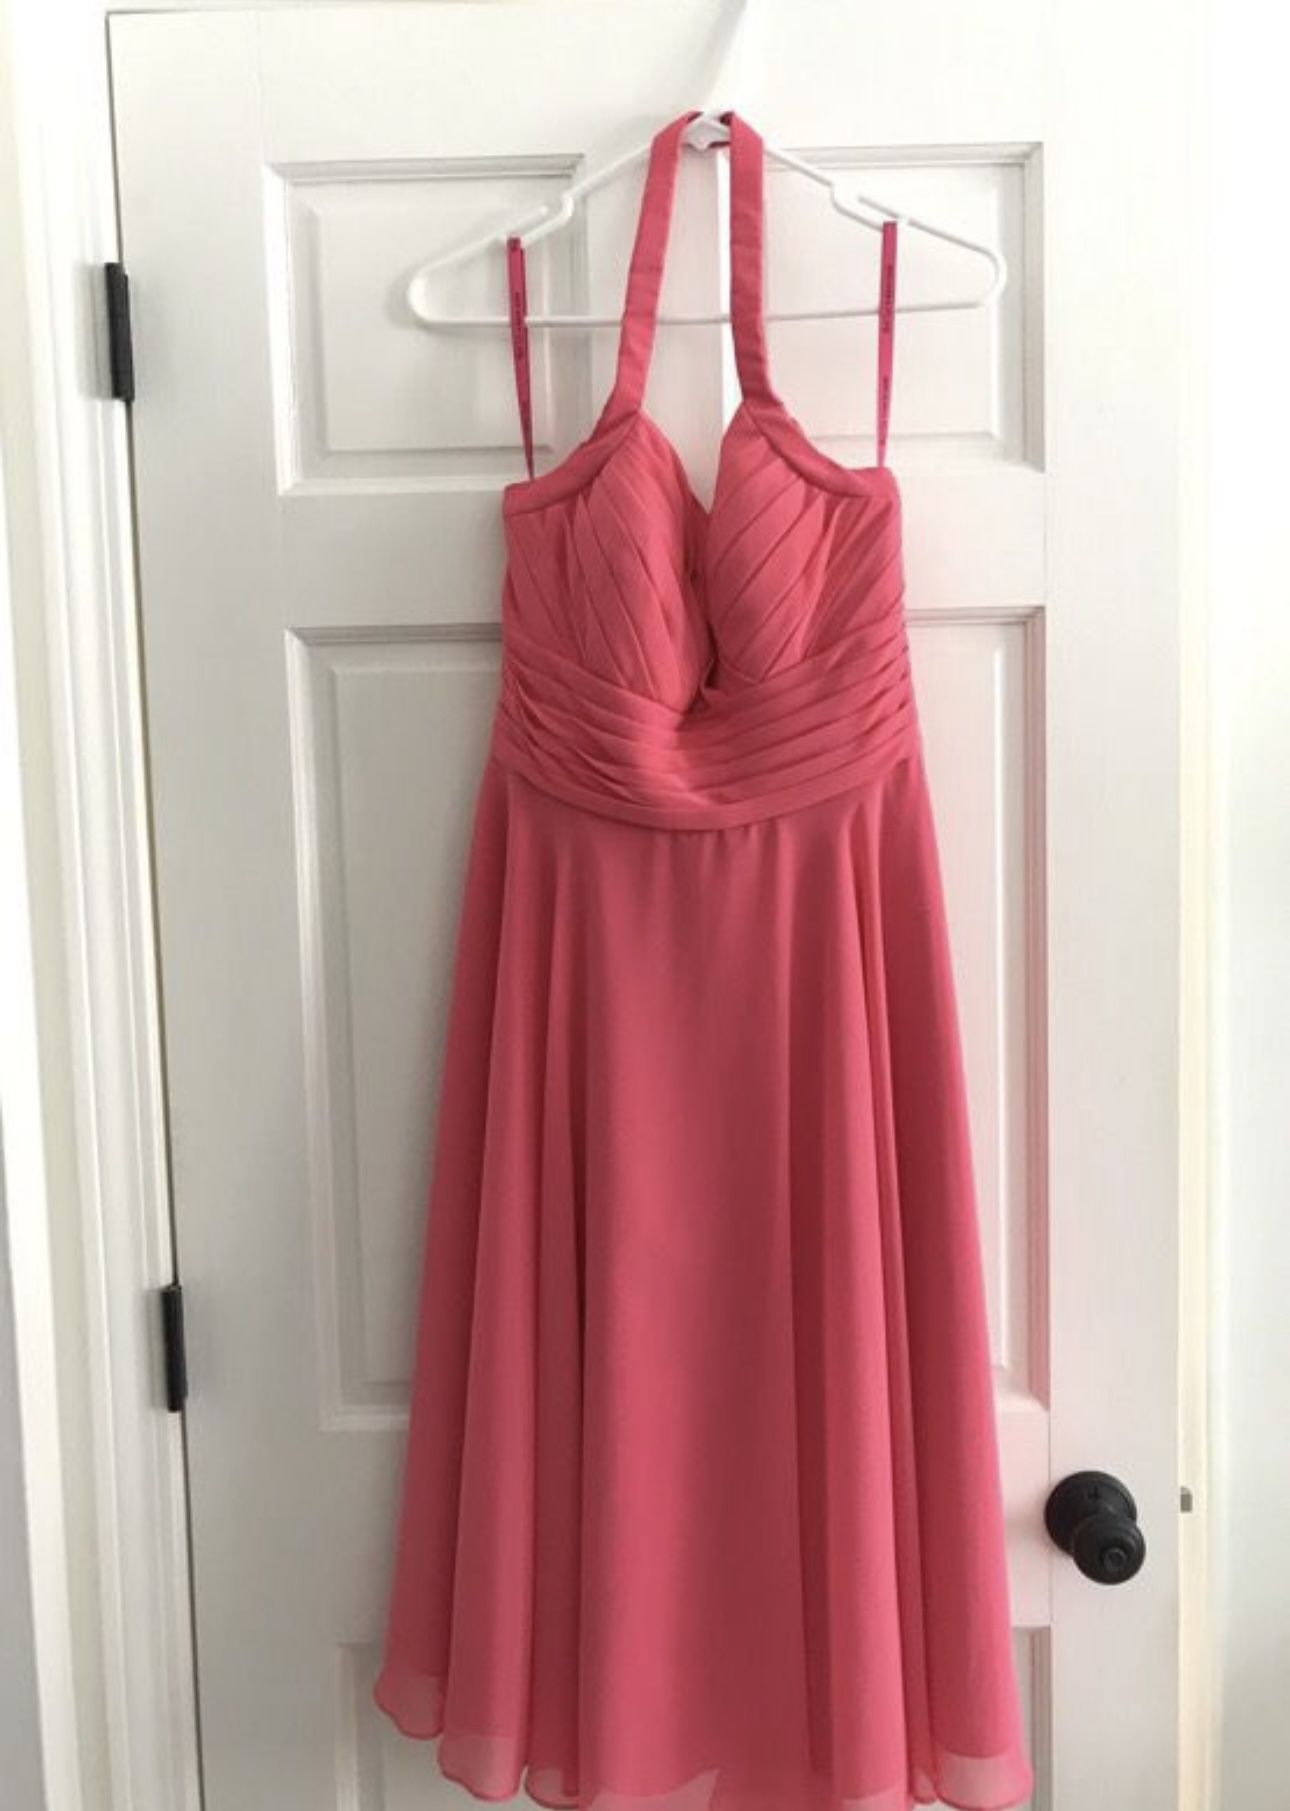 Prom Or Bridesmaids Dress Pink / Melon Pink 